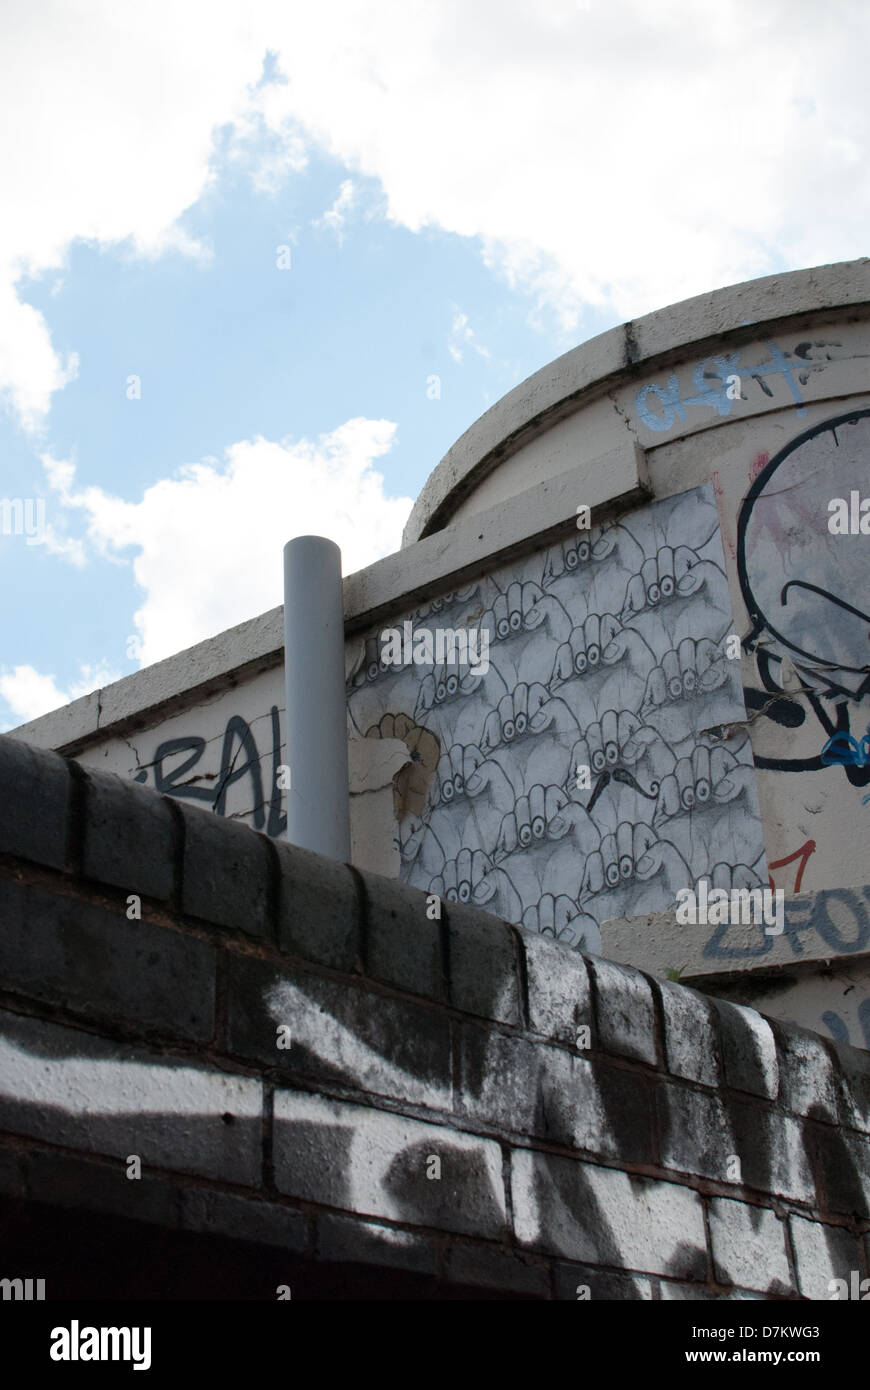 Graffiti in Birmingham, England. Stock Photo